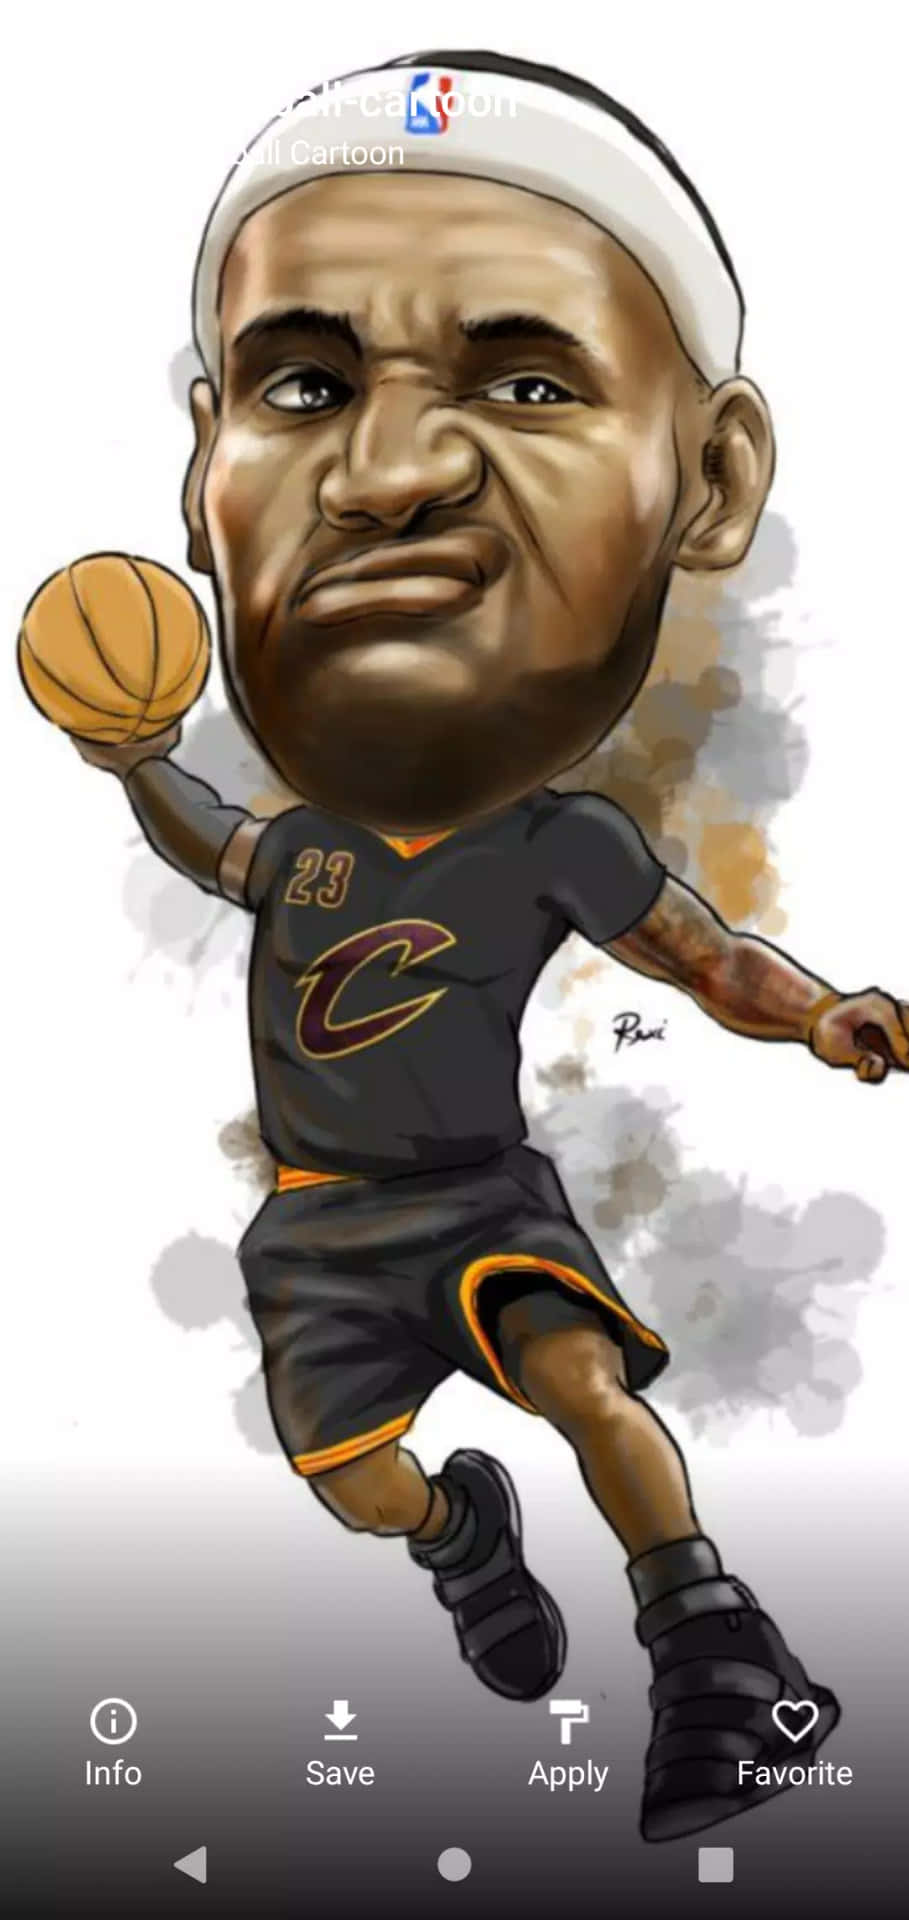 "NBA Cartoon" Wallpaper